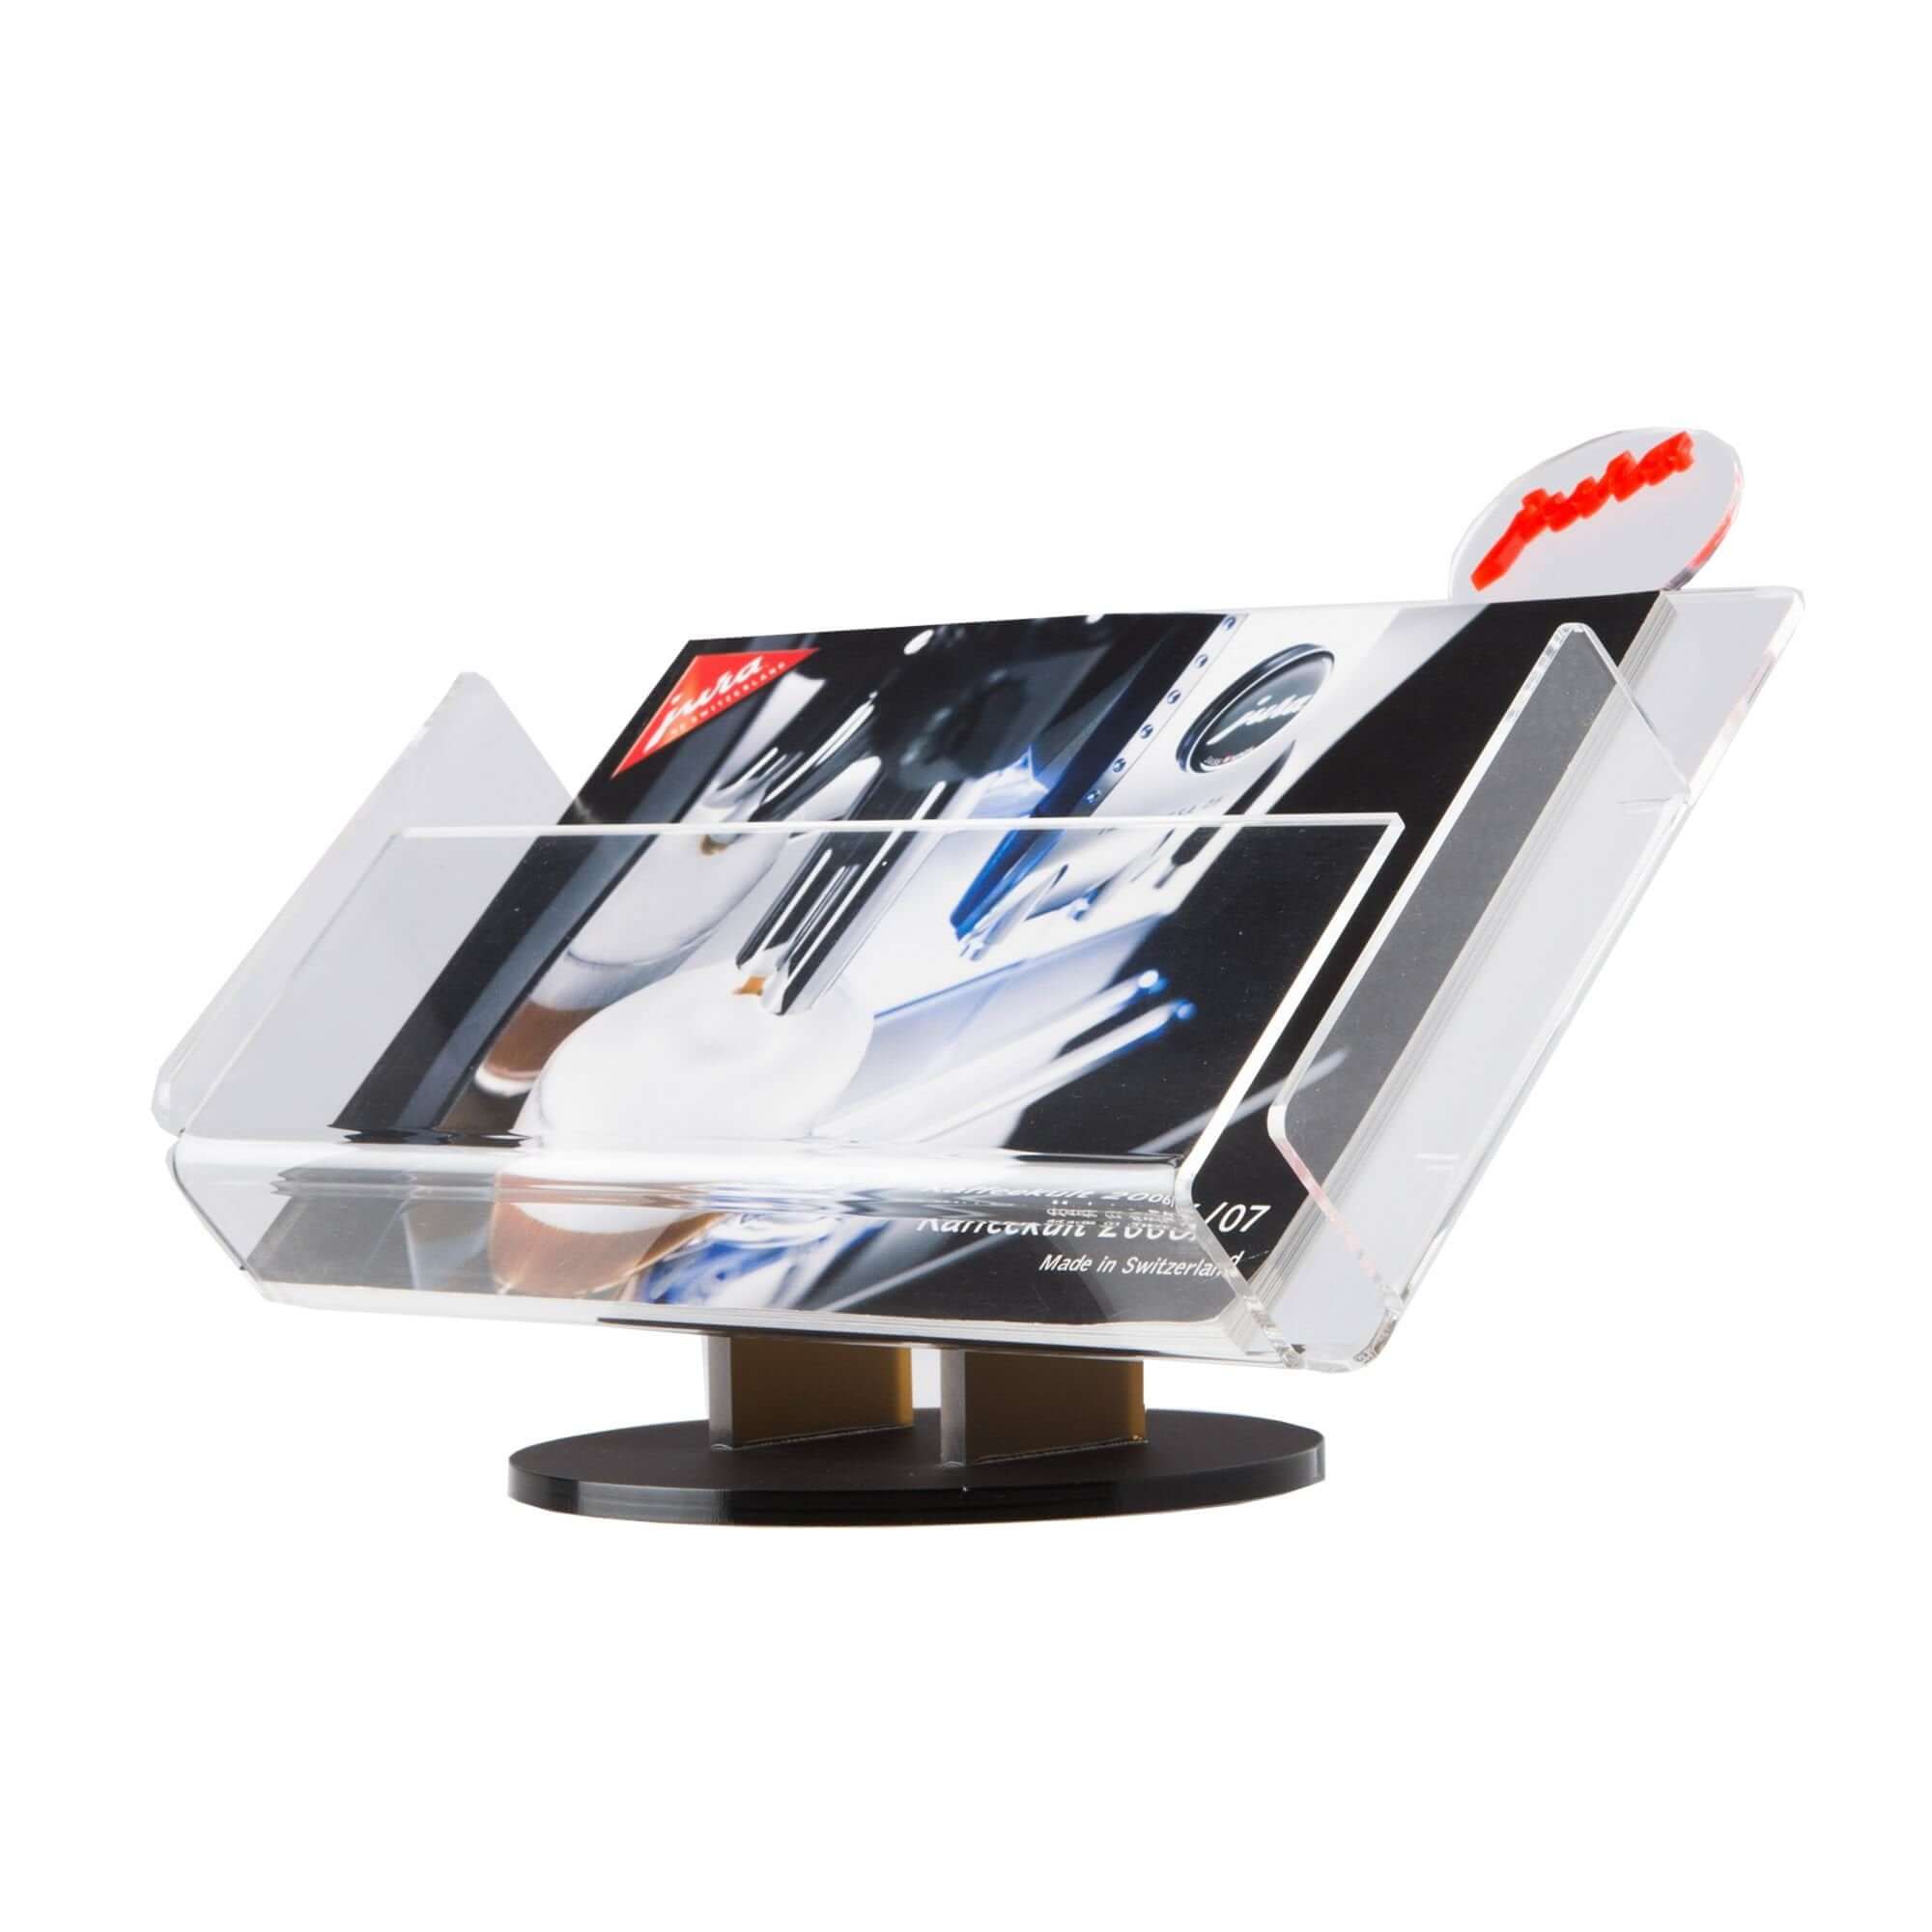 Acryline Prospektständer aus Acrylglas acryl kunststoff prospektehalter prospekthalter broschürenhalter werbehalter prospekte halter display verkaufsförderung aussteller